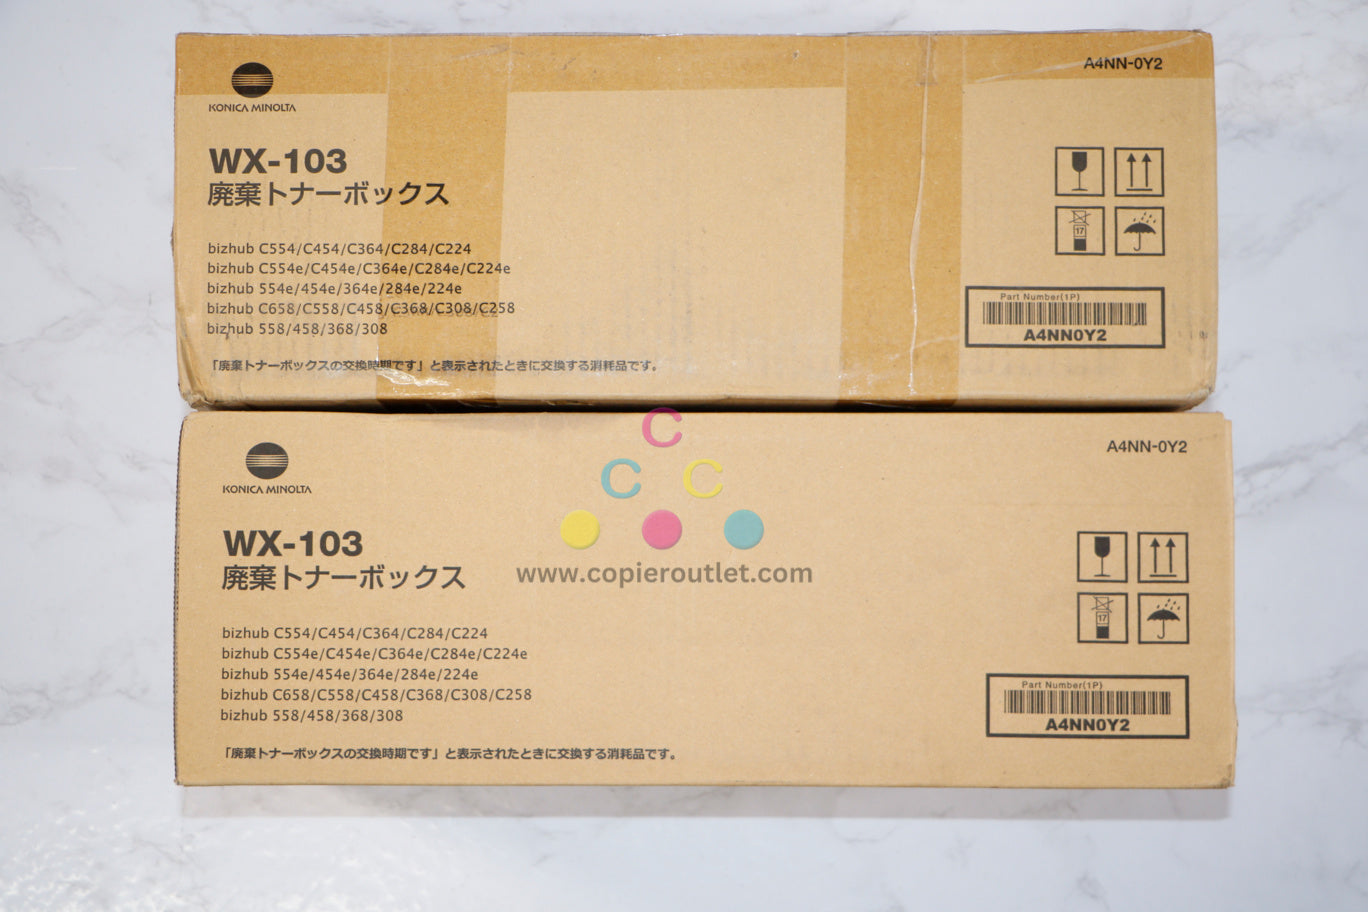 2 New OEM Konica BHC554,C454,C364,C284,C224 Waste Toner Box WX-103 / A4NN-0Y2